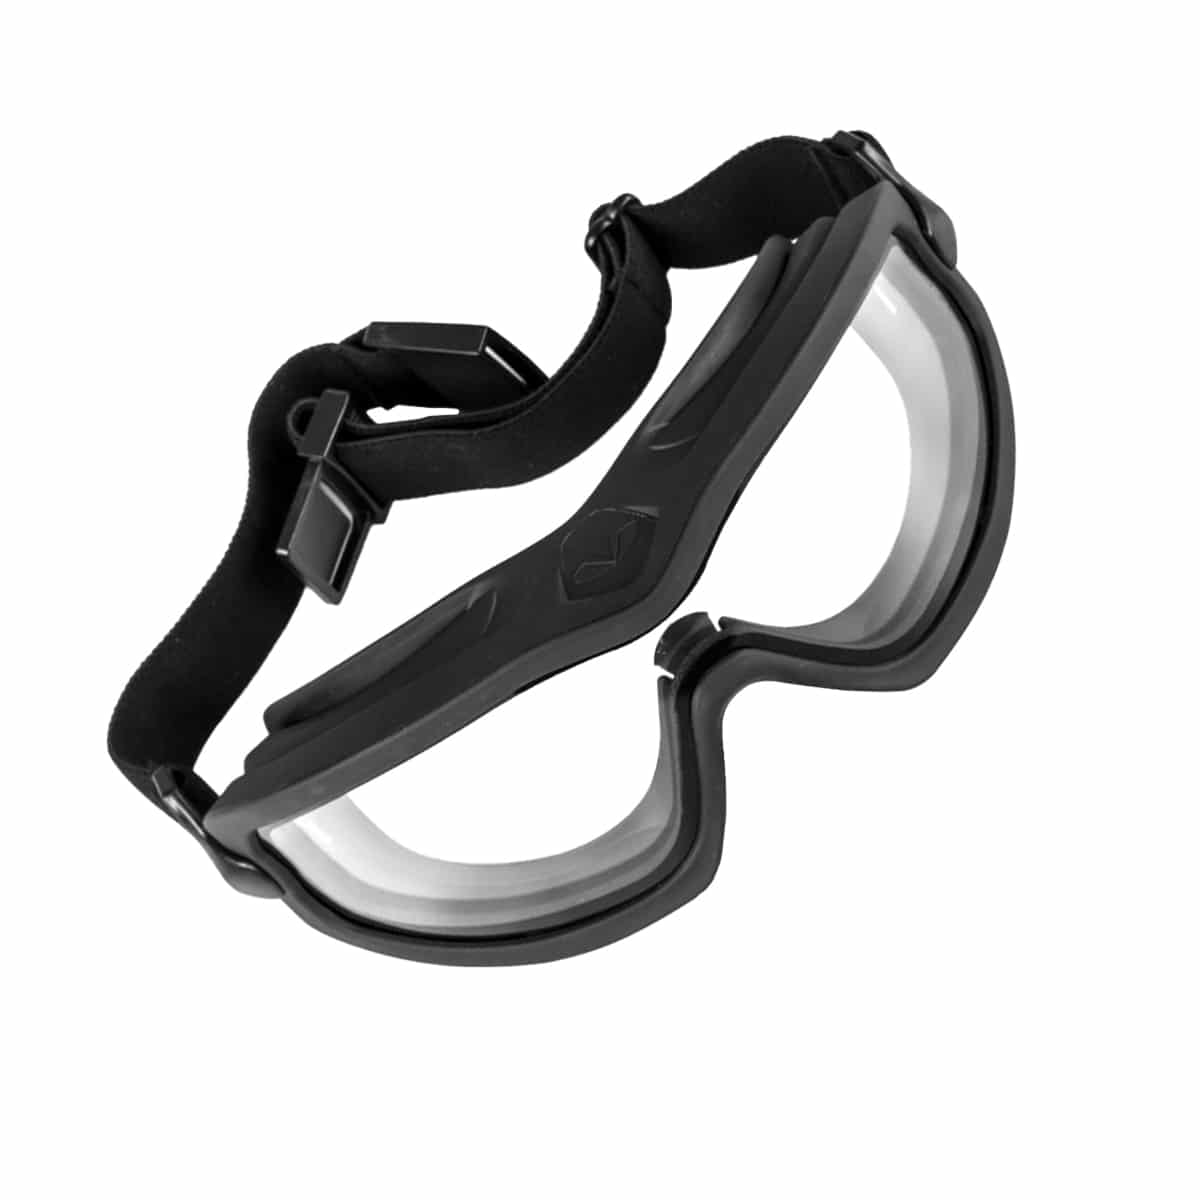 Novritsch AntiFog Safety Goggles – Large